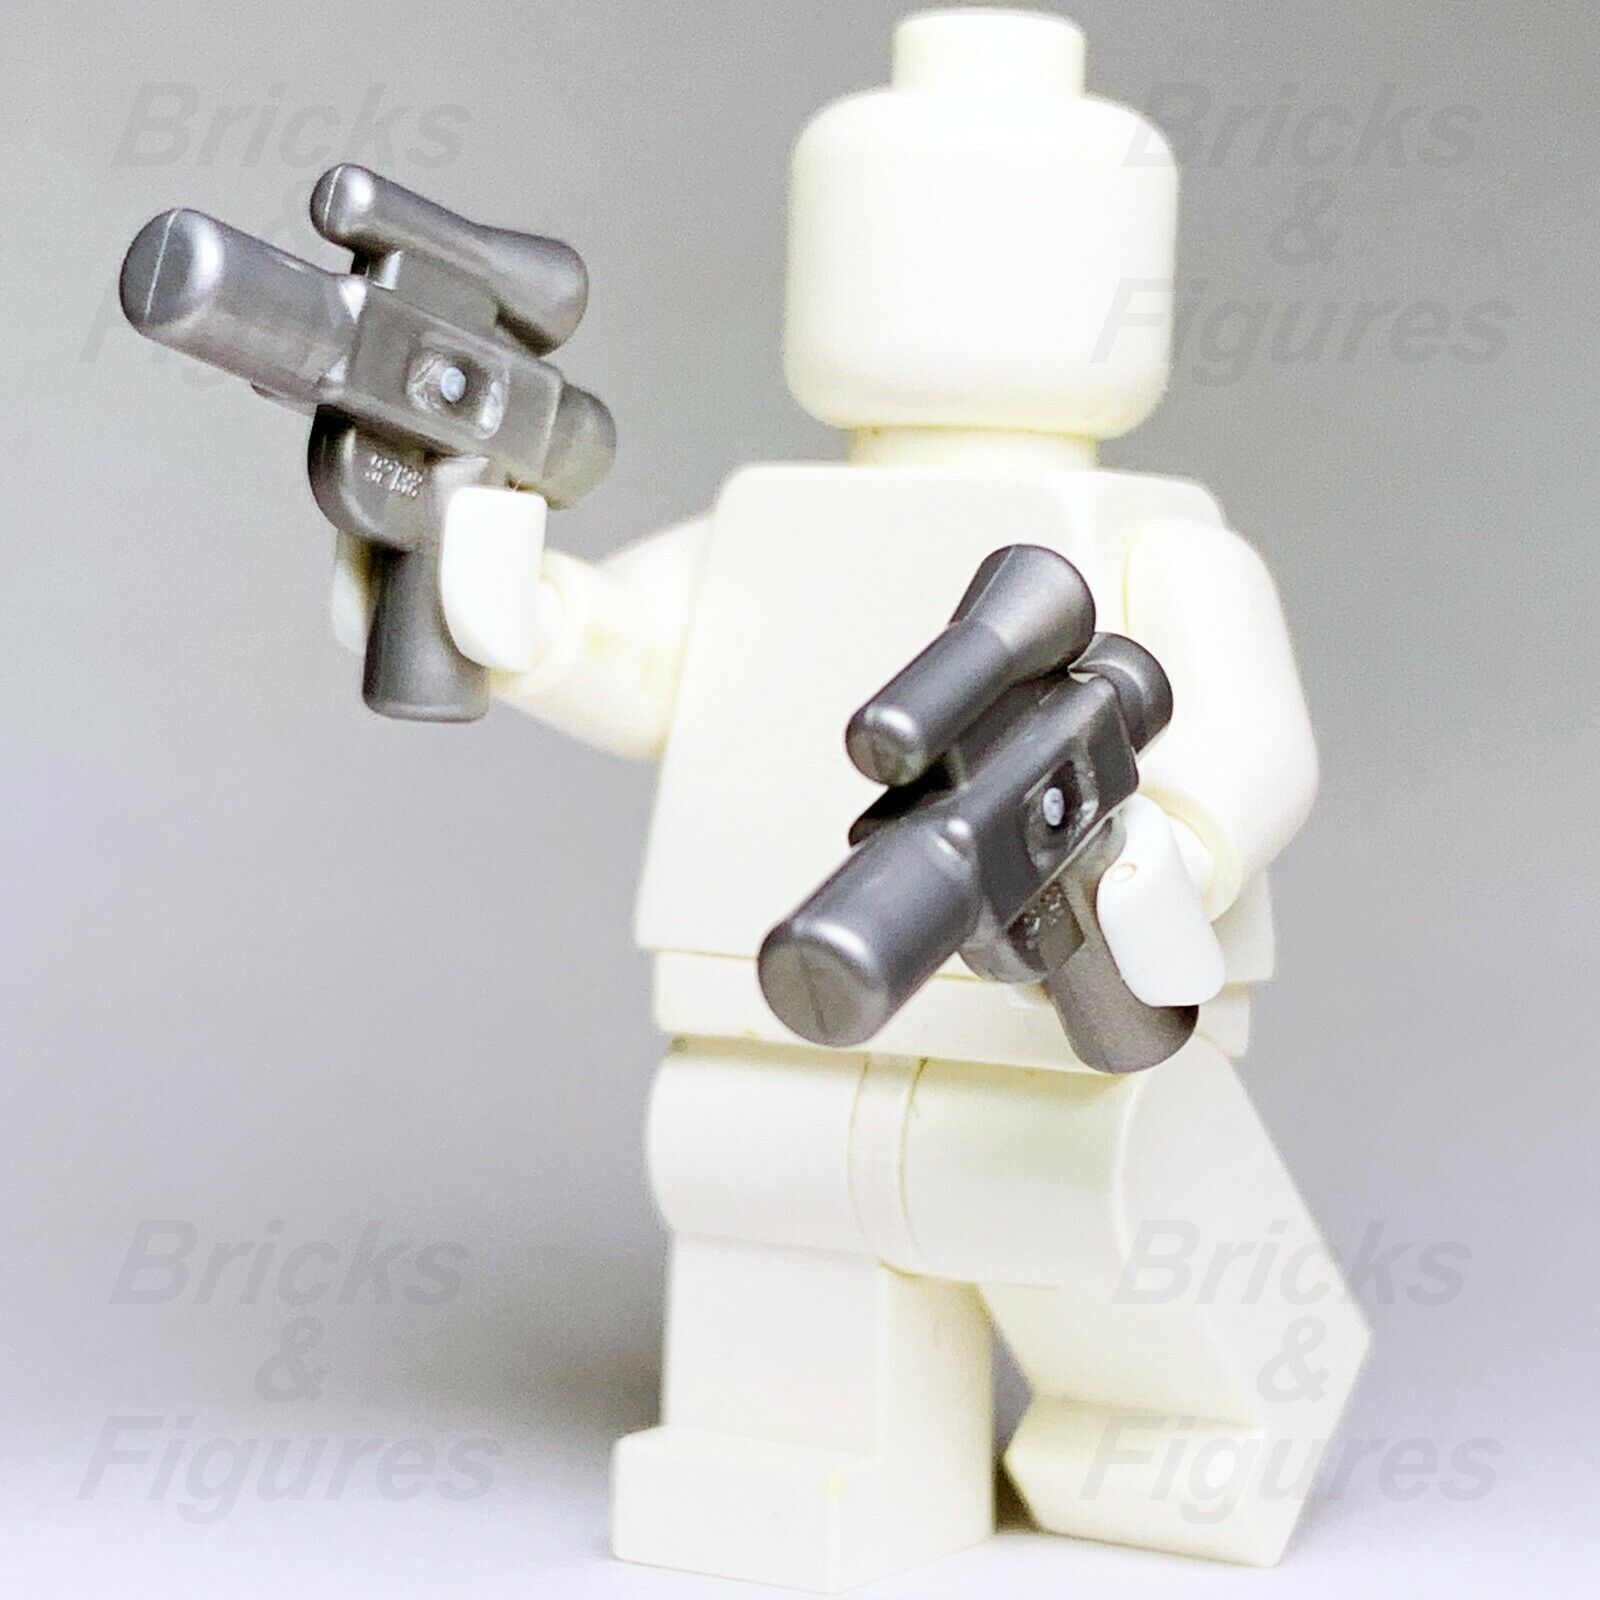 5 x Star Wars LEGO Small Blaster Flat Silver Gun Minifigure Weapon Parts SW - Bricks & Figures